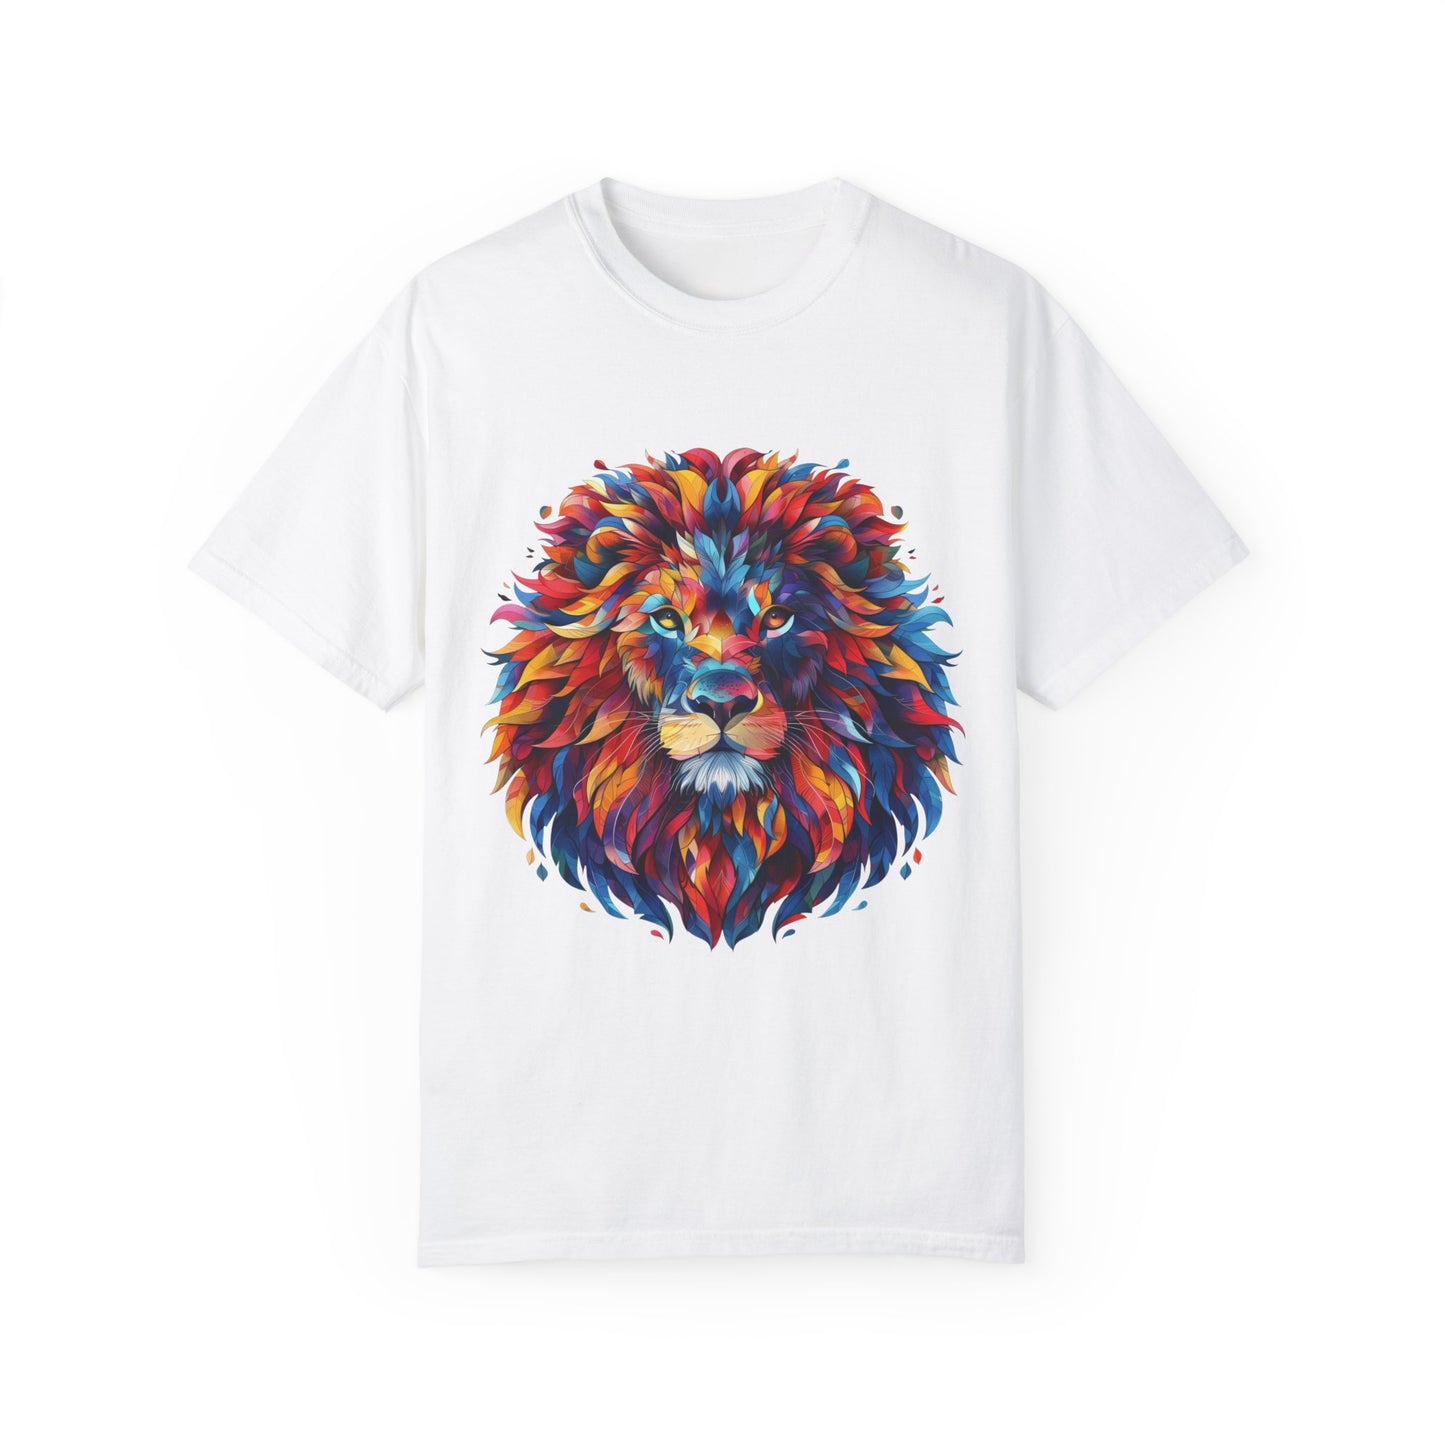 Lion Head Cool Graphic Design Novelty Unisex Garment-dyed T-shirt Cotton Funny Humorous Graphic Soft Premium Unisex Men Women White T-shirt Birthday Gift-3